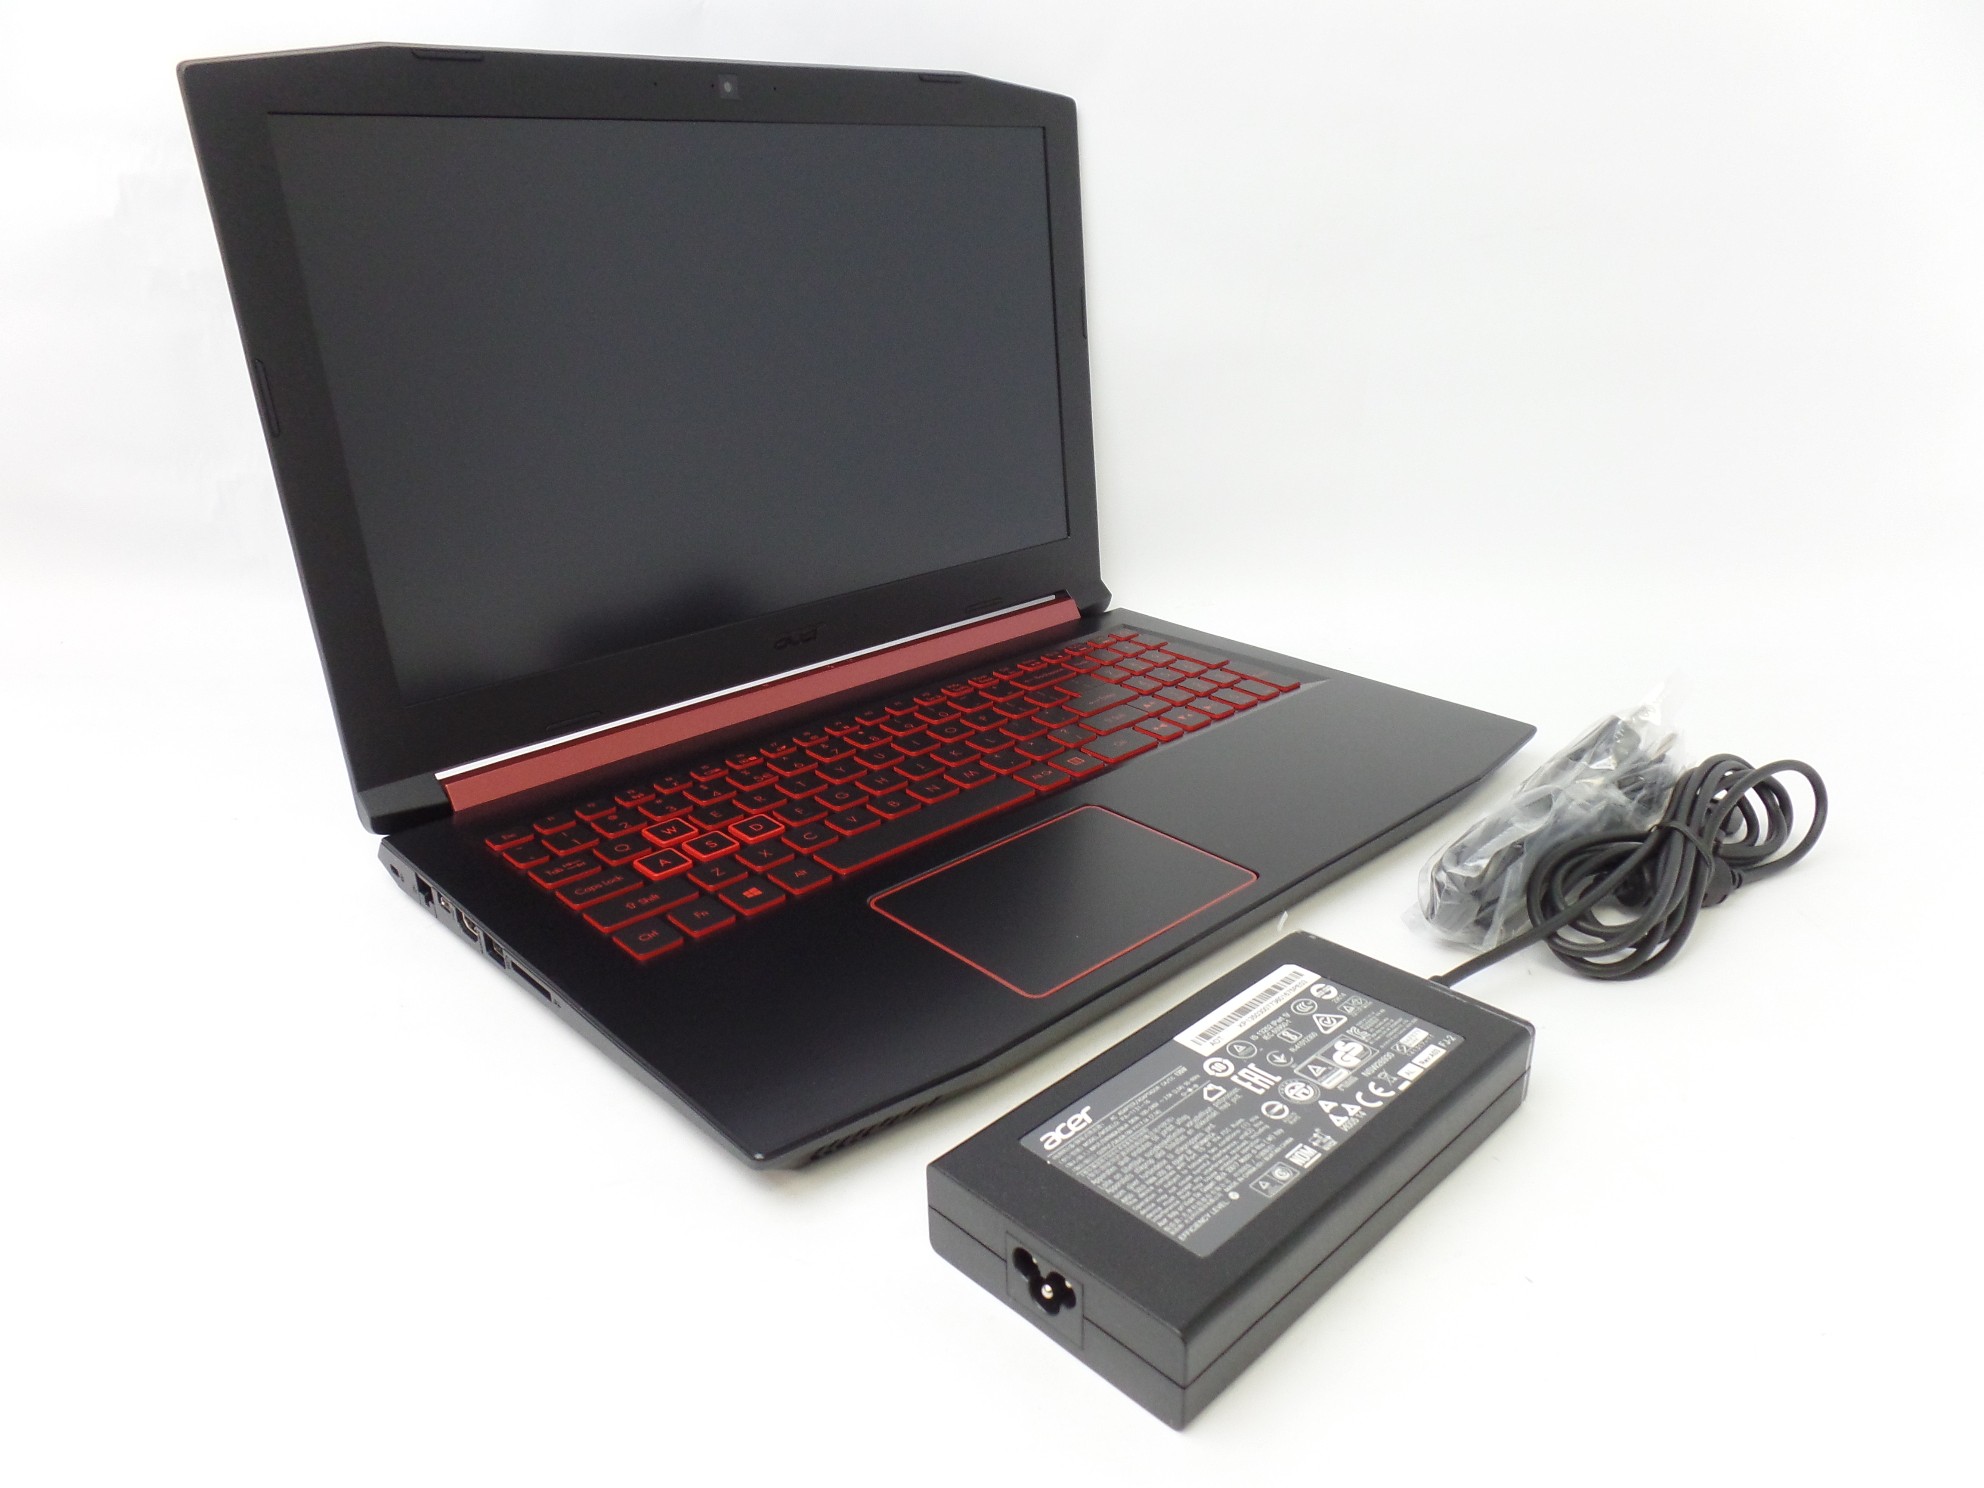 Acer Nitro 5 AN515-51-5594 15.6" FHD i5-7300HQ 2.5GHz 8GB 1TB GTX1050 Laptop SD